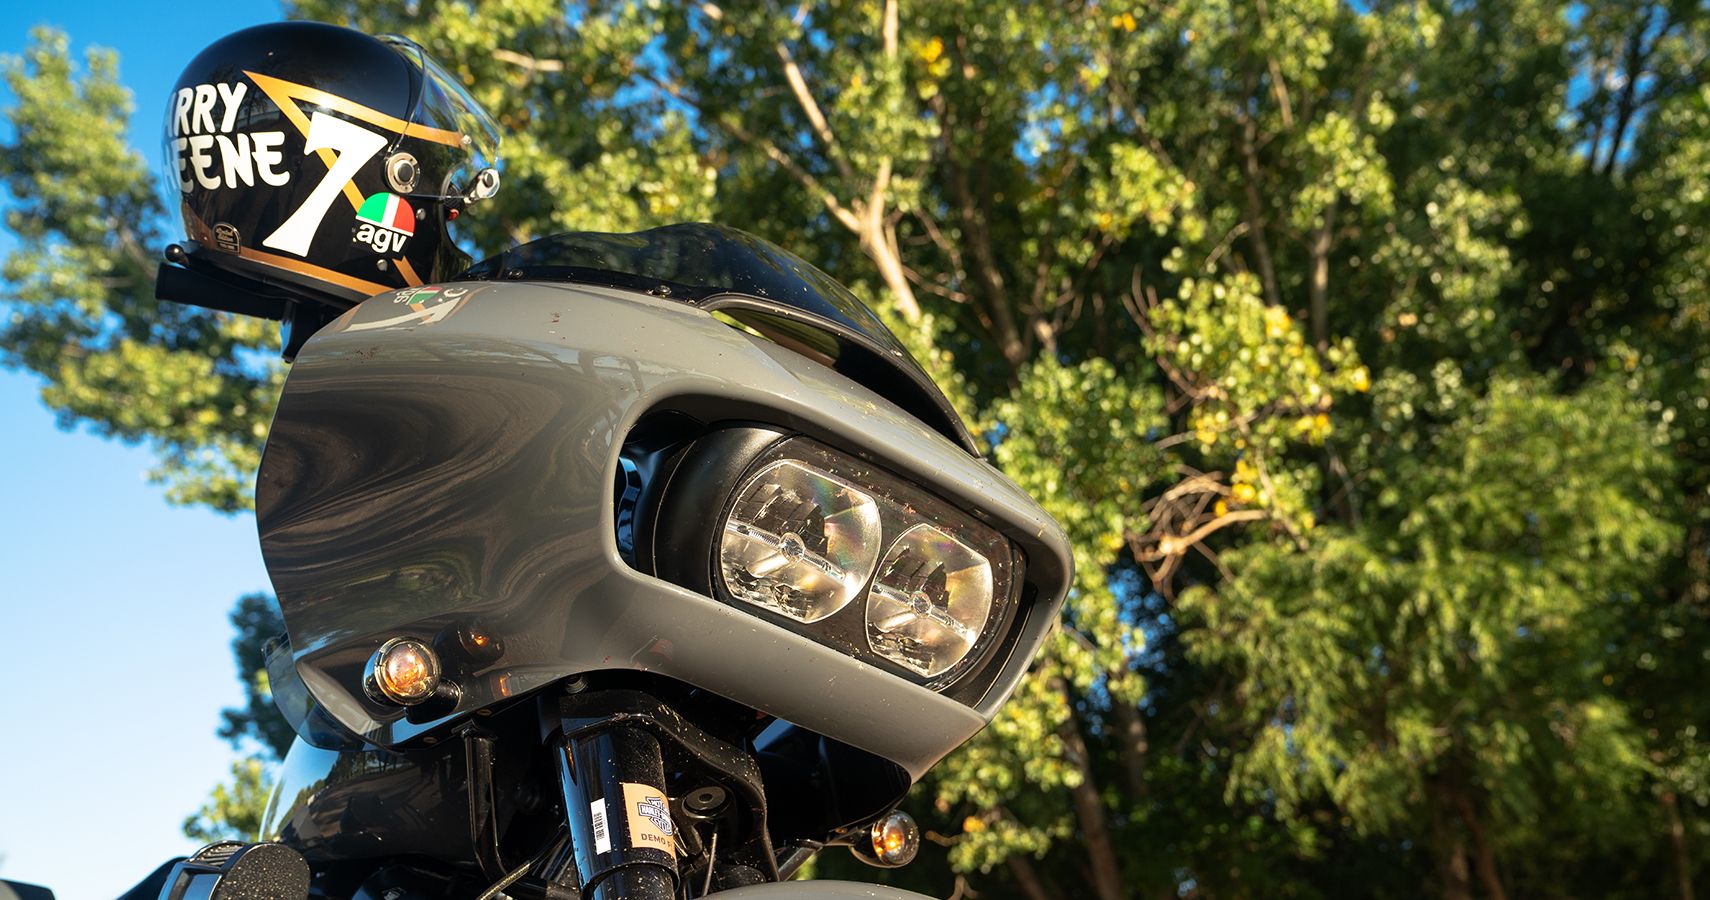 2022 Harley-Davidson Road Glide ST headlights